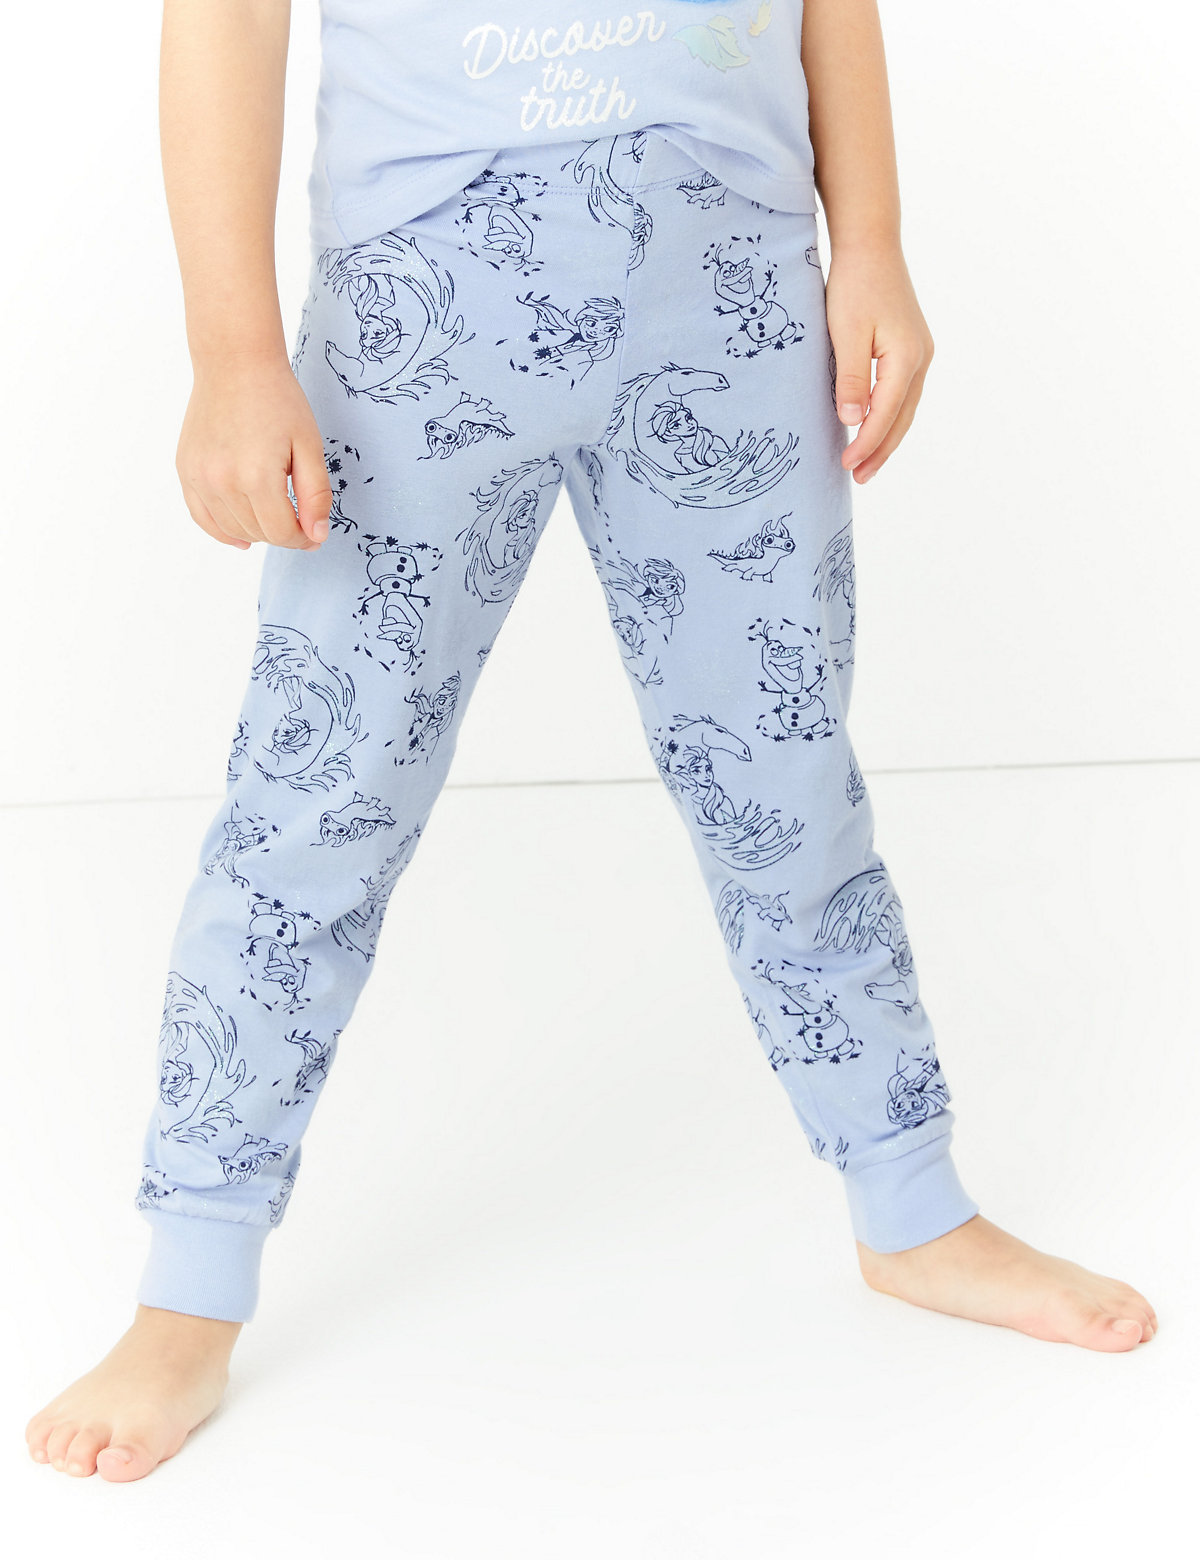 Disney Frozen 2 Glitter Print Pyjamas